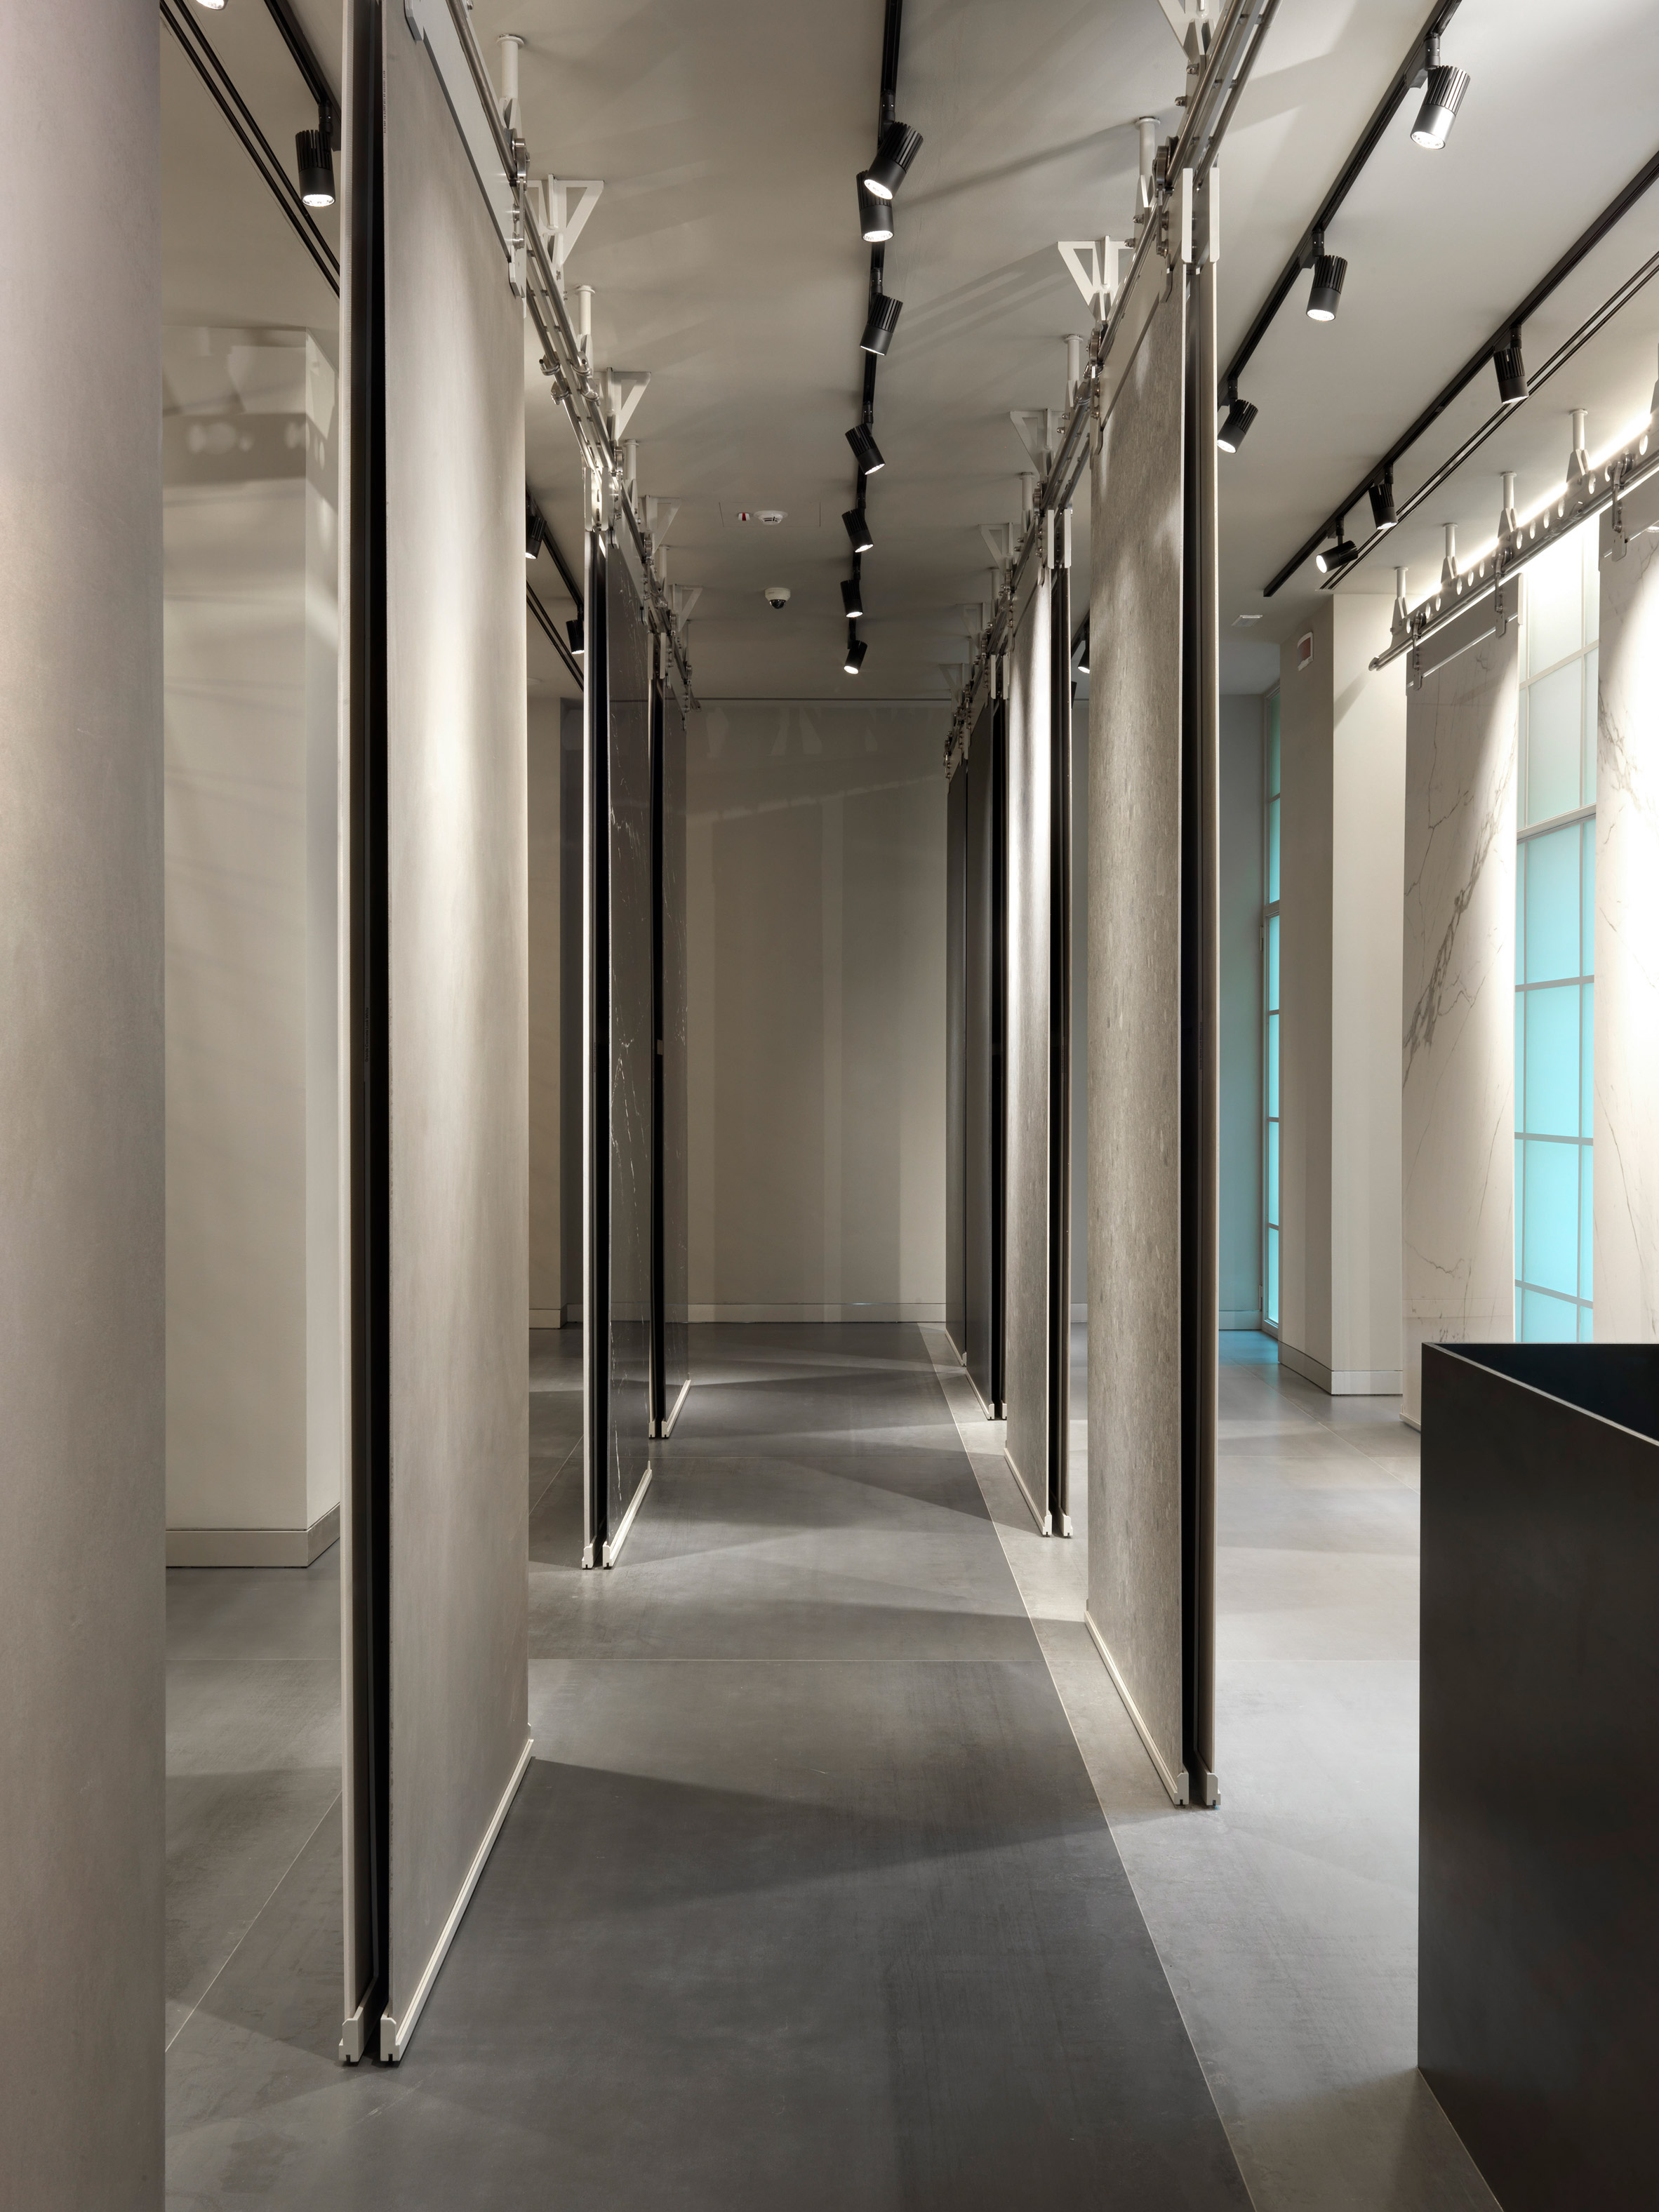 Marazzi showroom in Milan, designed by Antonio Citterio and Patricia Viel